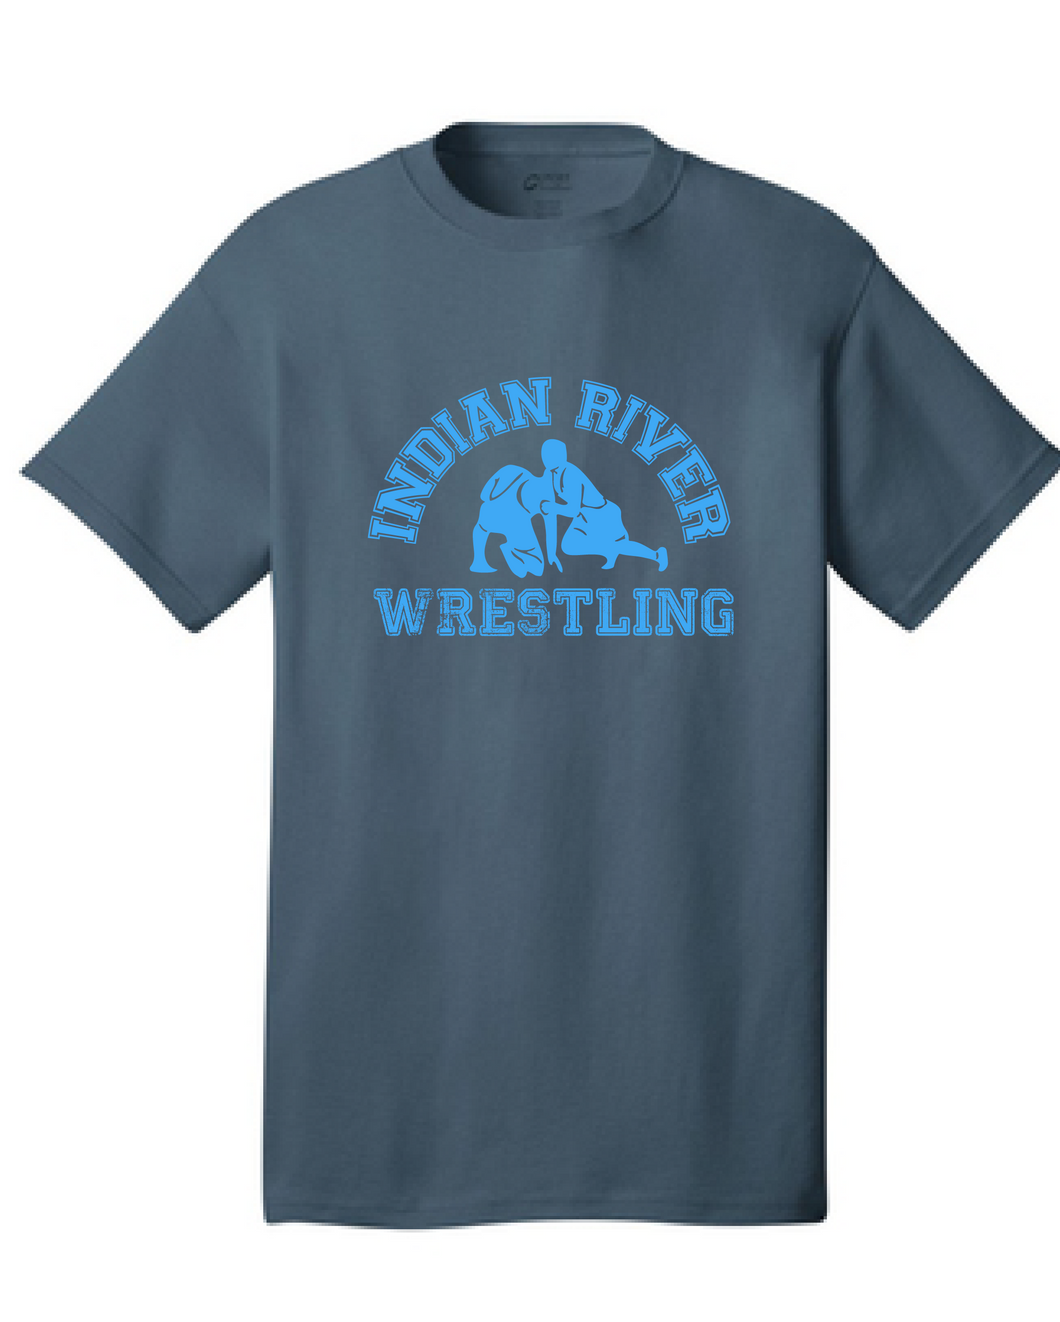 Cotton Short Sleeve Shirt / Navy / Indian River Wrestling - Fidgety